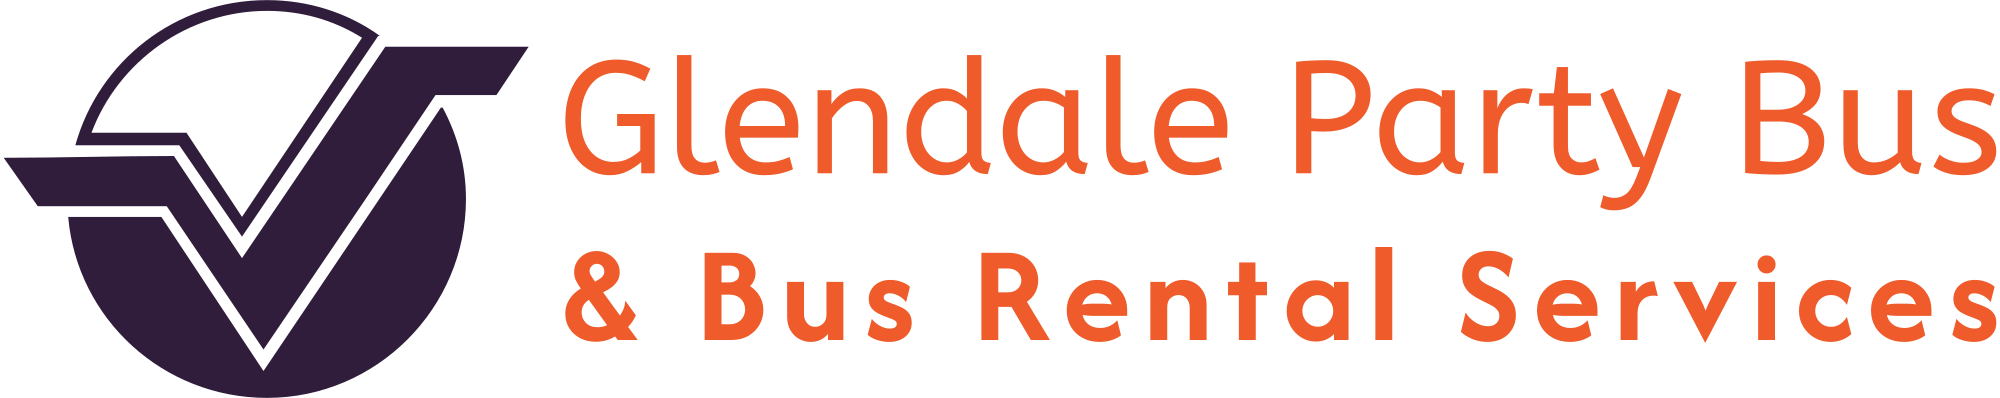 Glendale Party Bus Company logo